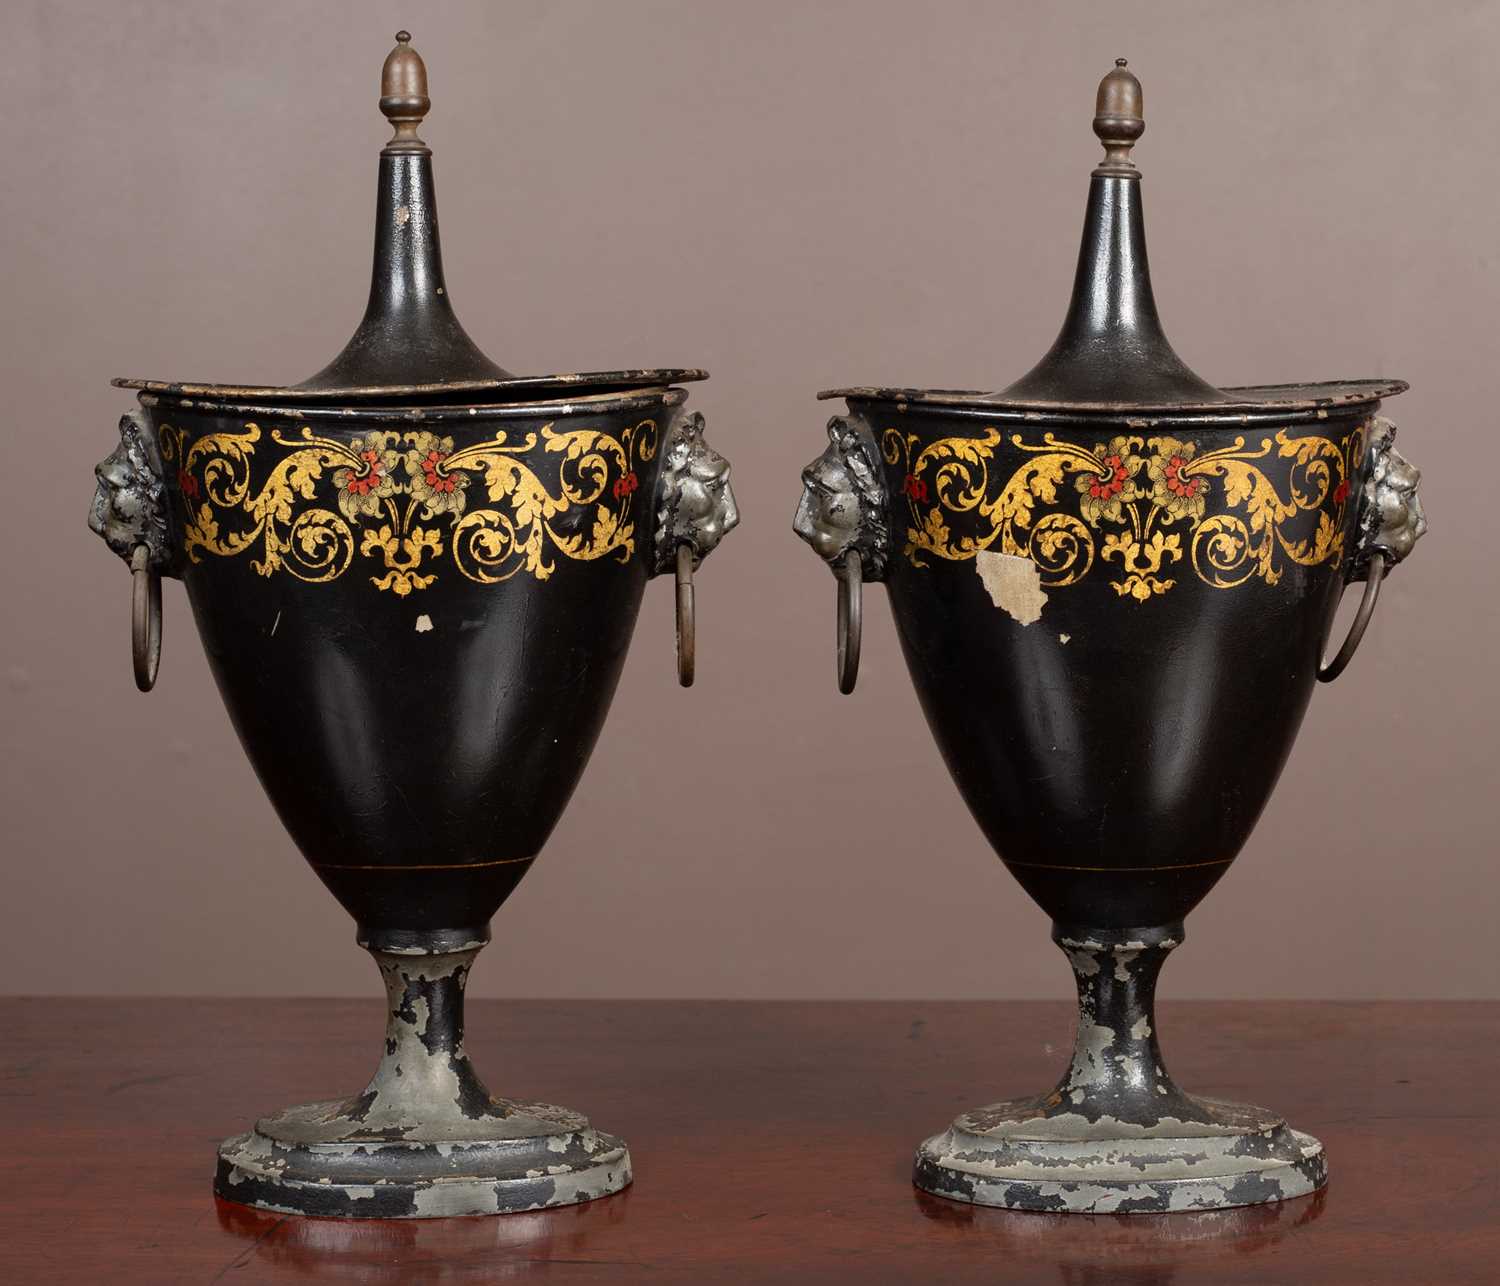 A pair of Regency pedestal toleware chestnut urns